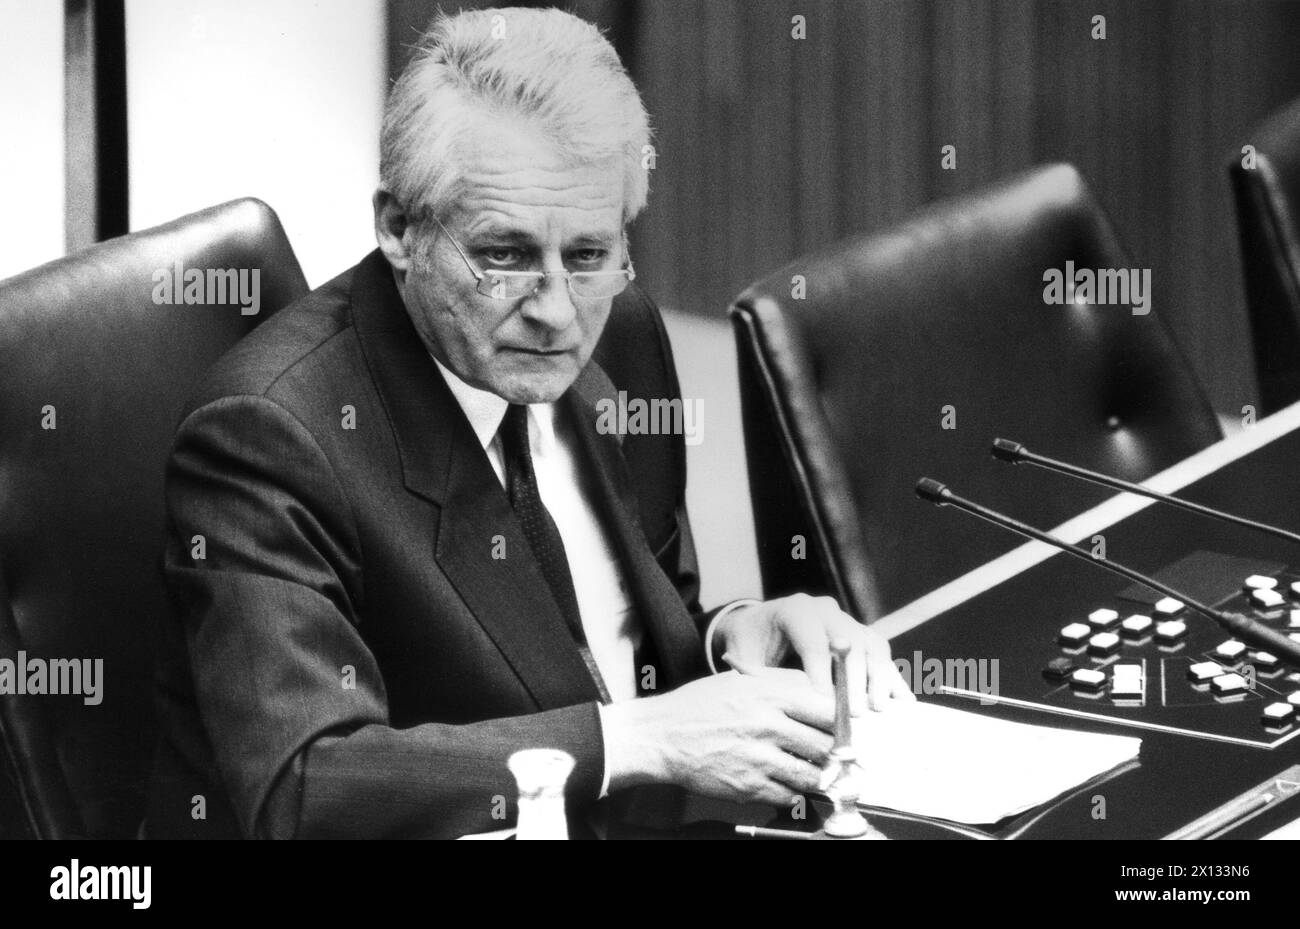 Leopold Gratz, Bundespräsident Österreichs, erklärt nach der Sitzung am 25. Januar 1989 seinen Rücktritt. - 19890125 PD0003 - Rechteinfo: Rechte verwaltet (RM) Stockfoto